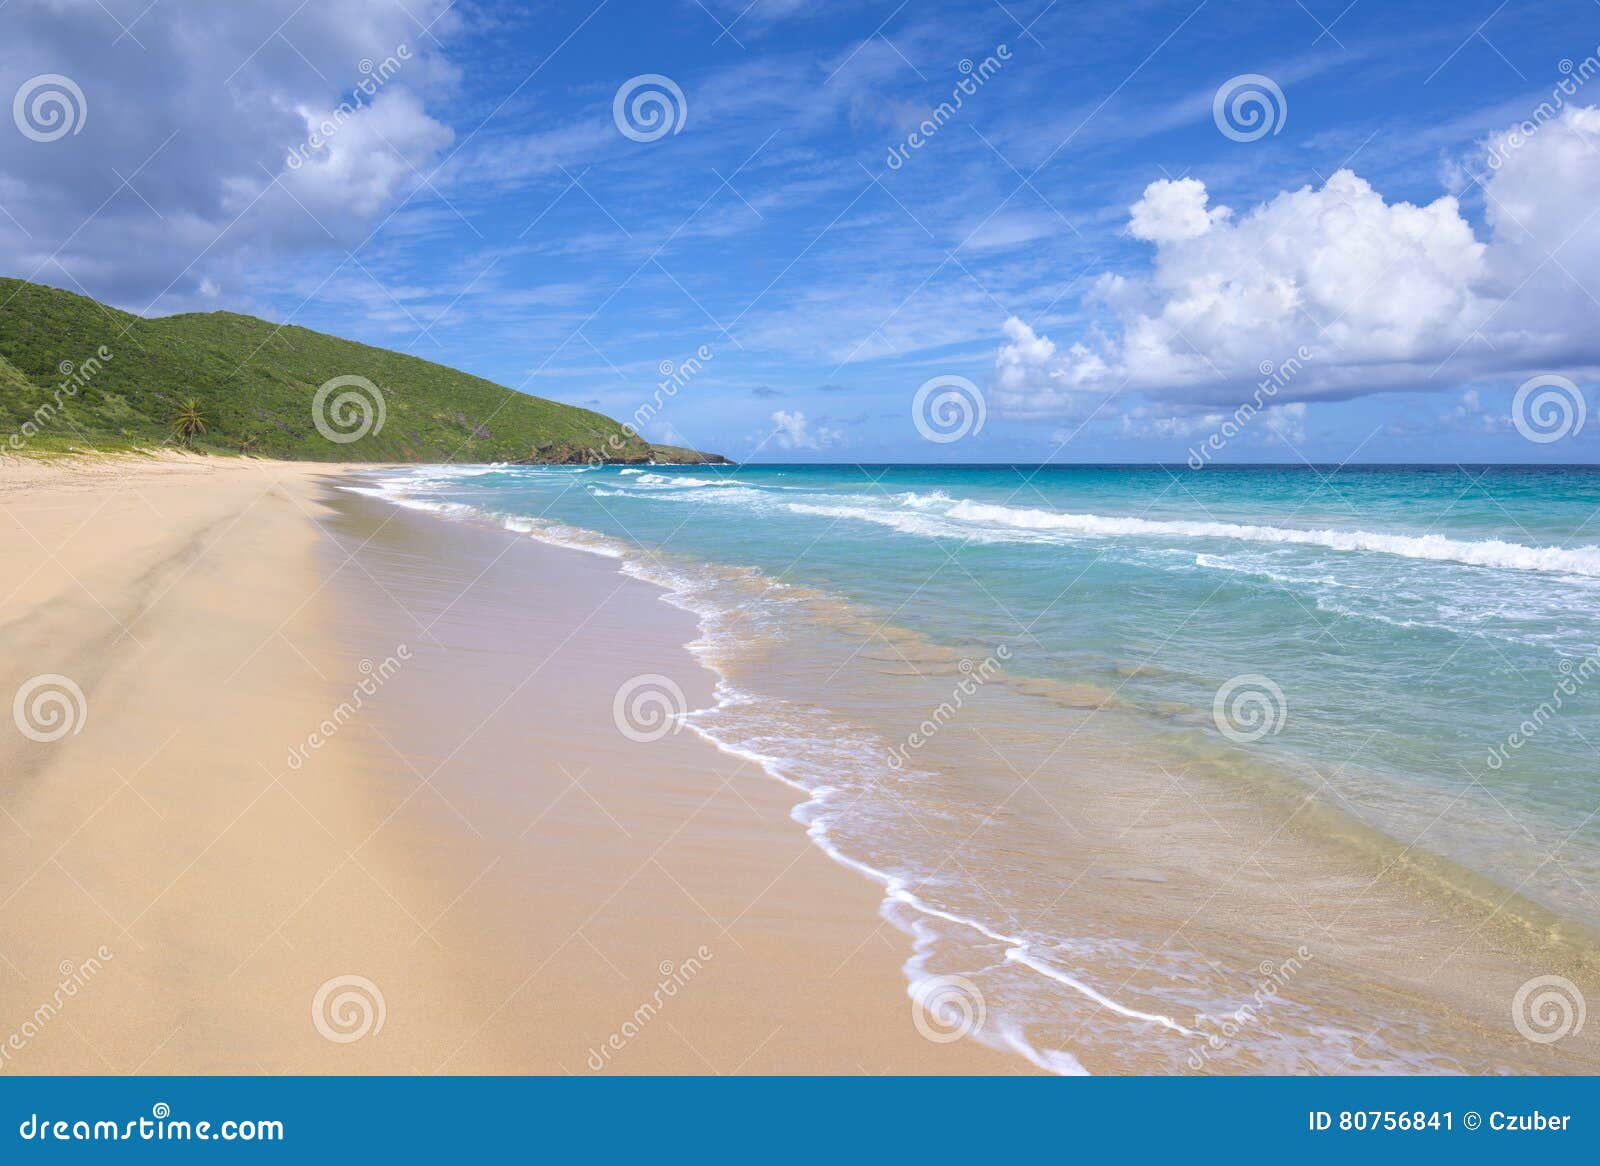 beautiful sandy resaca beach on isla culebra